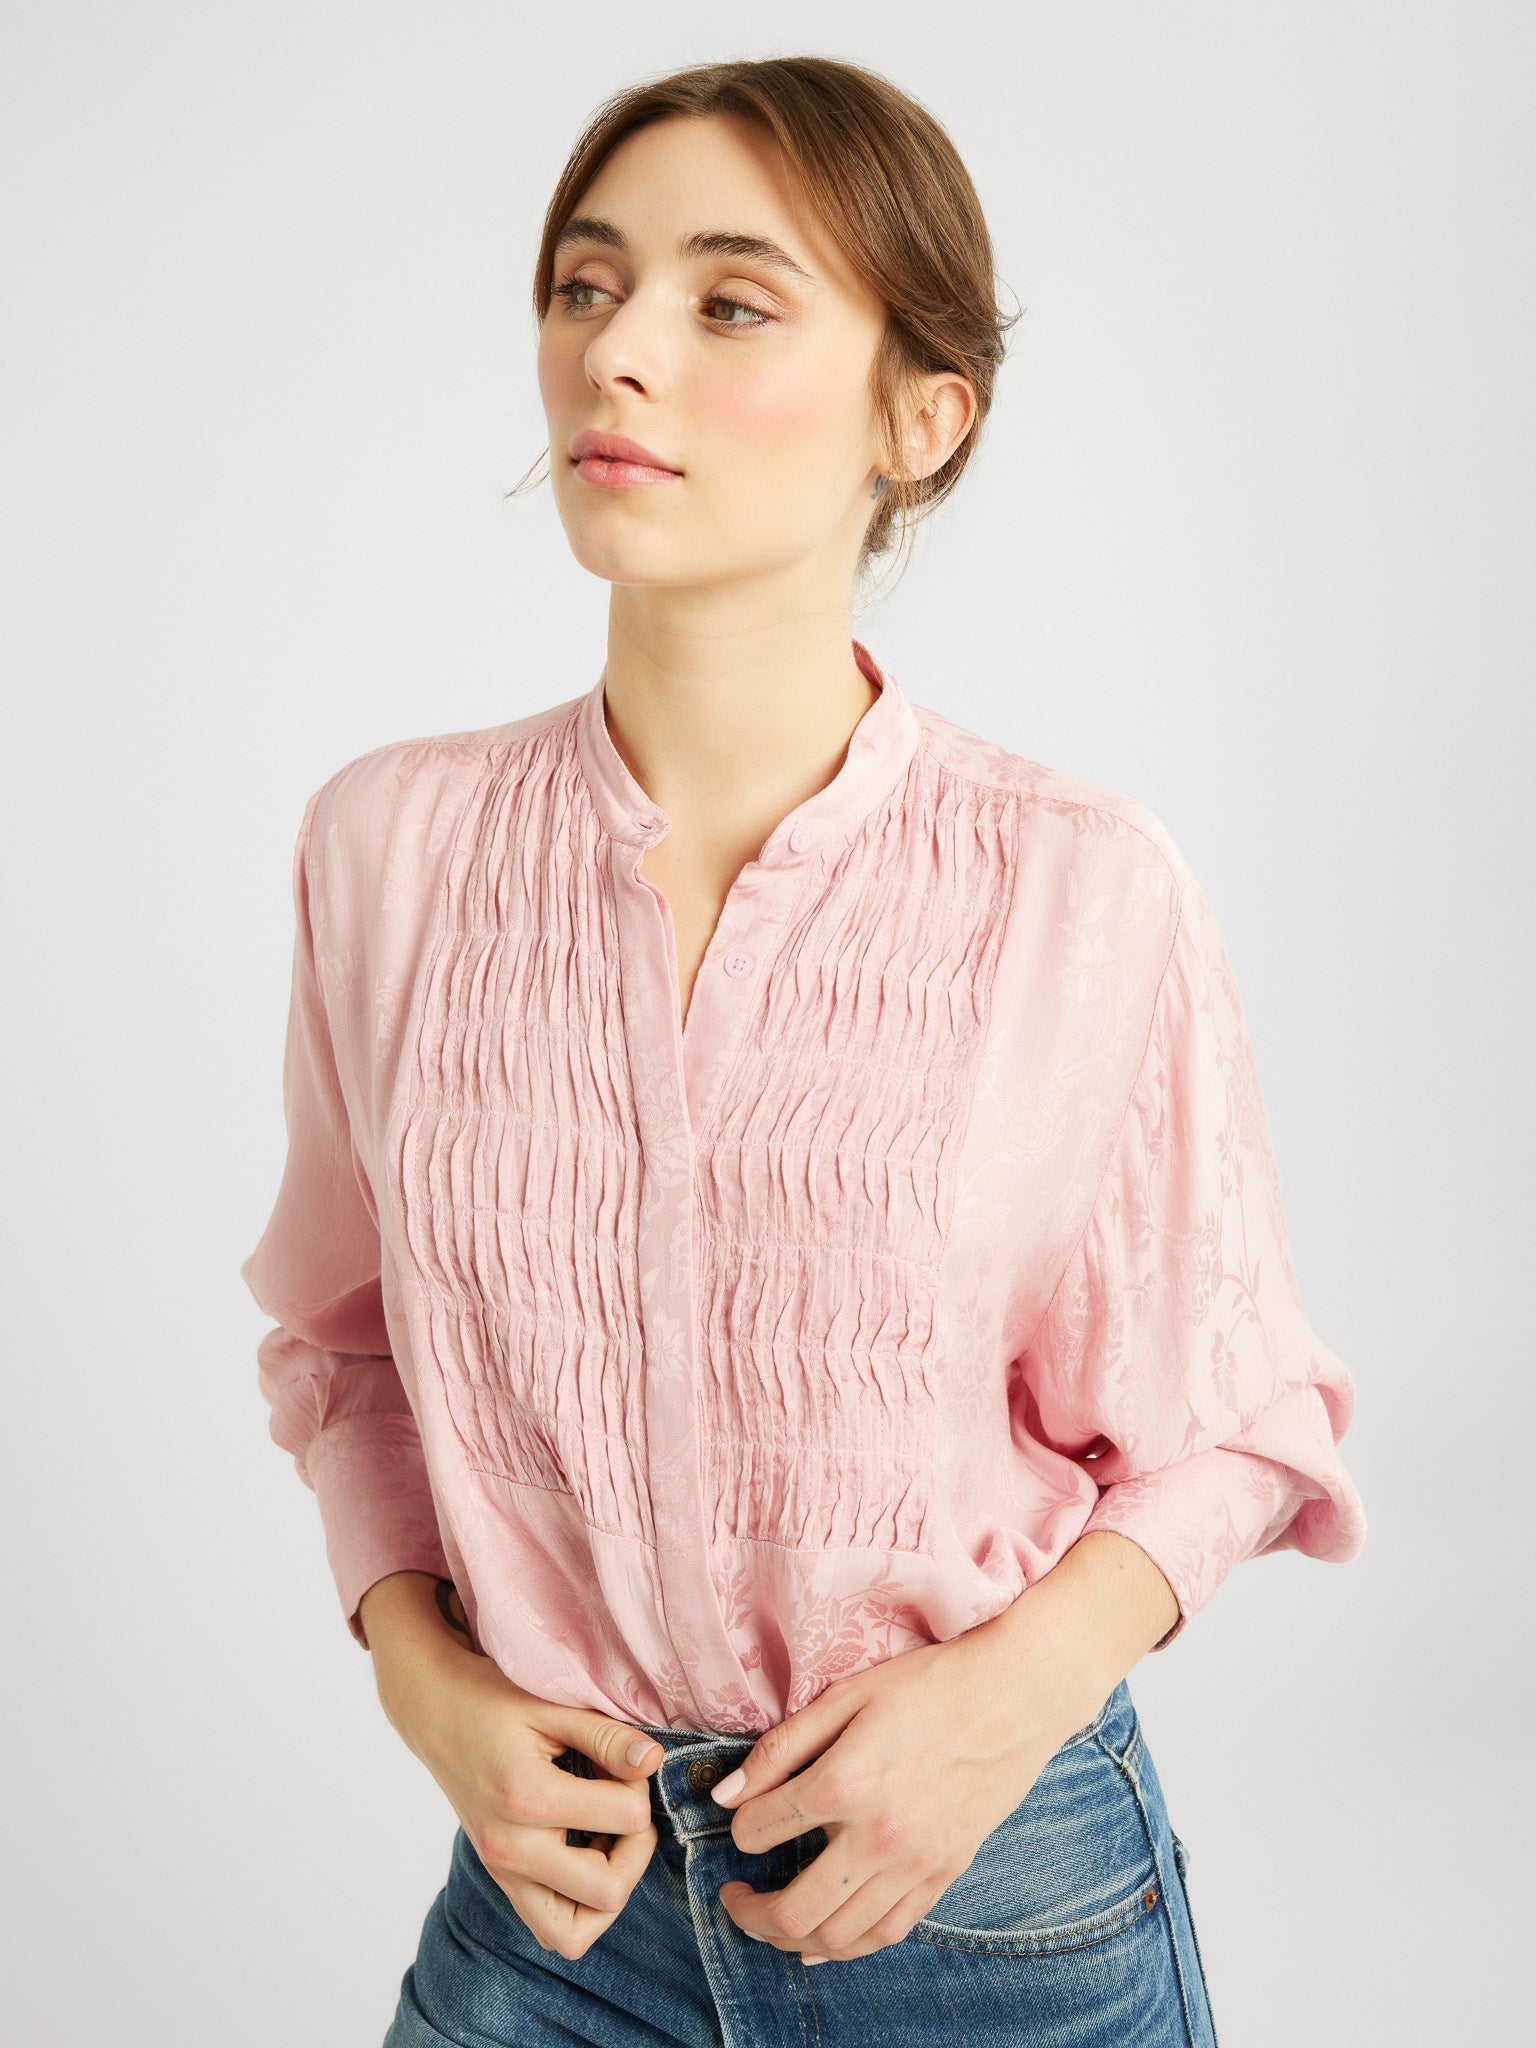 MILLE Clothing Keaton Top in Pink Jacquard